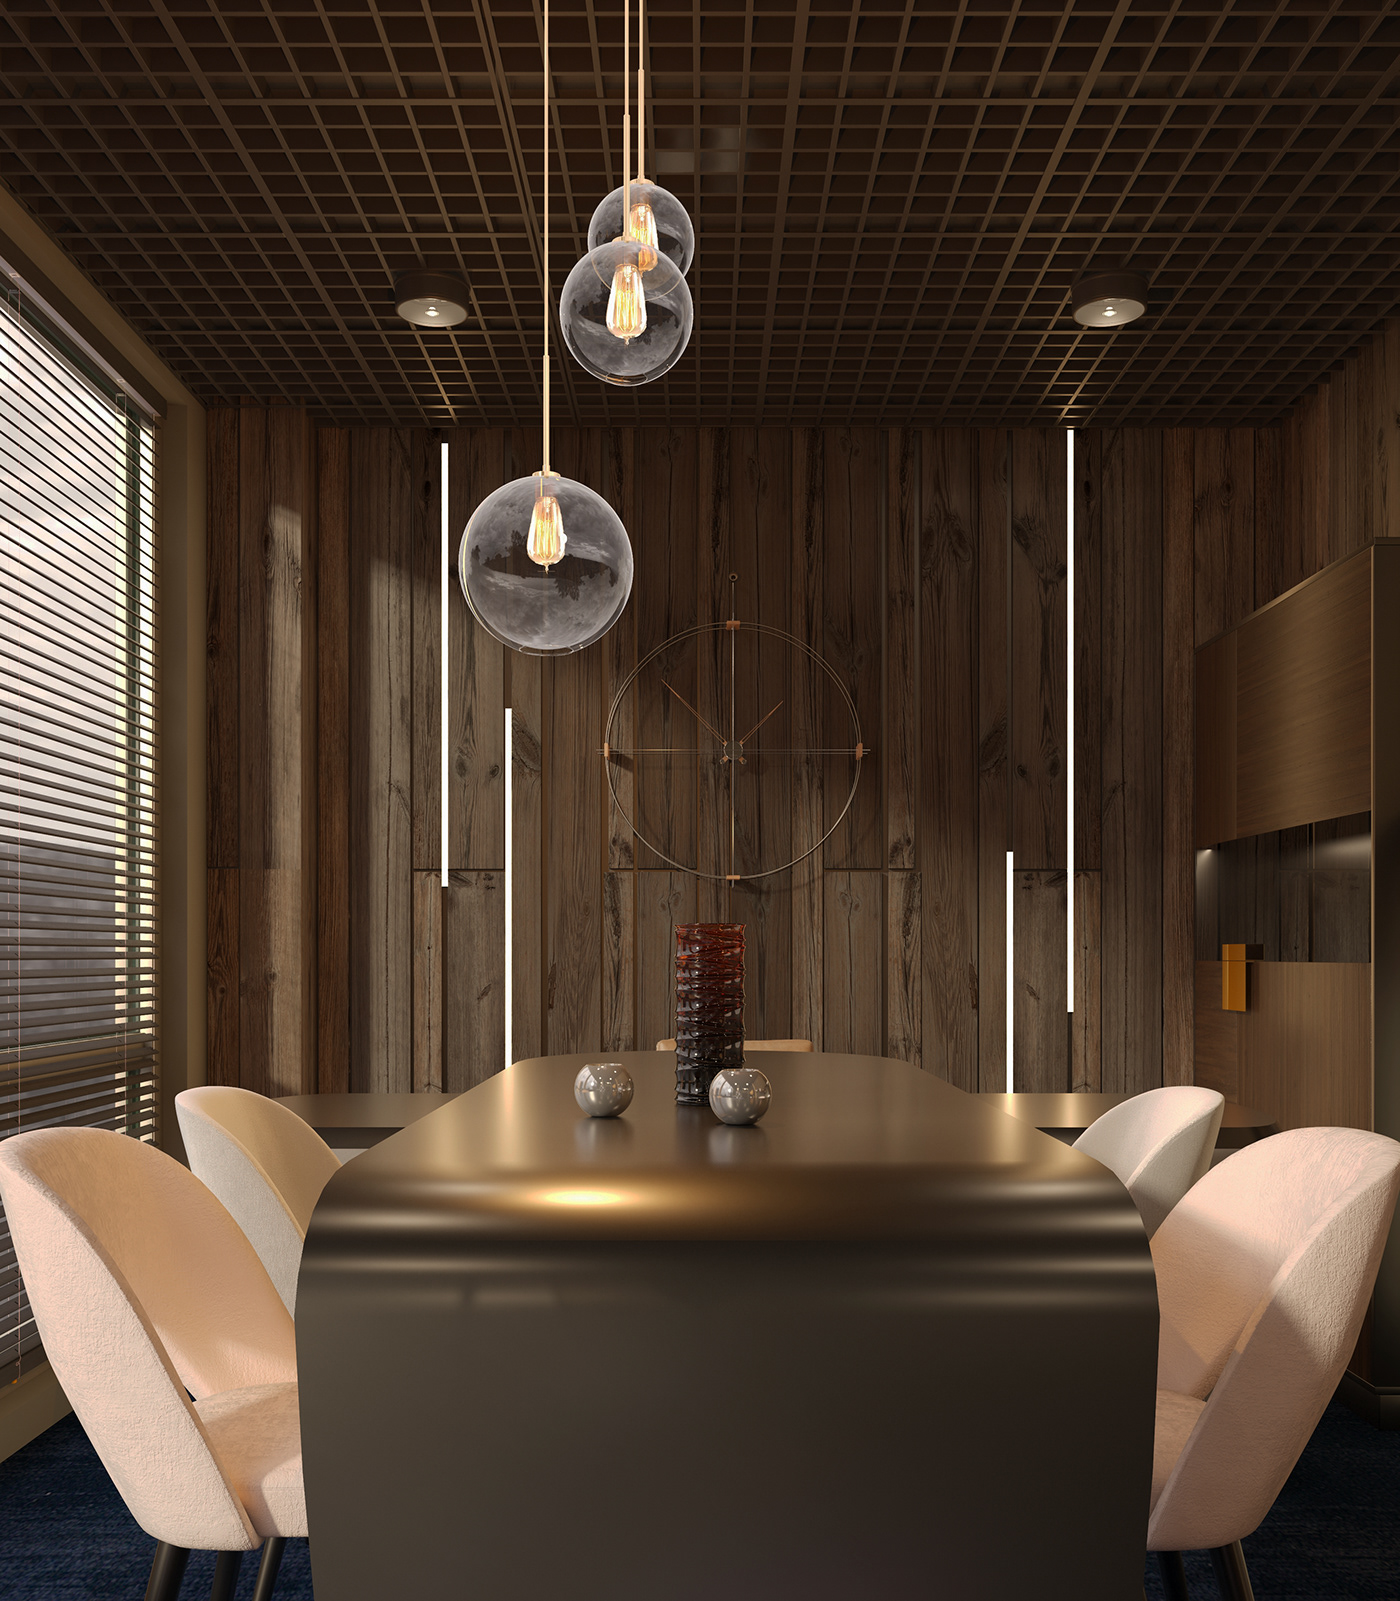 3dsmax 3Dvizualization Interior interiordesign interiordesigner officedesign Vizualization